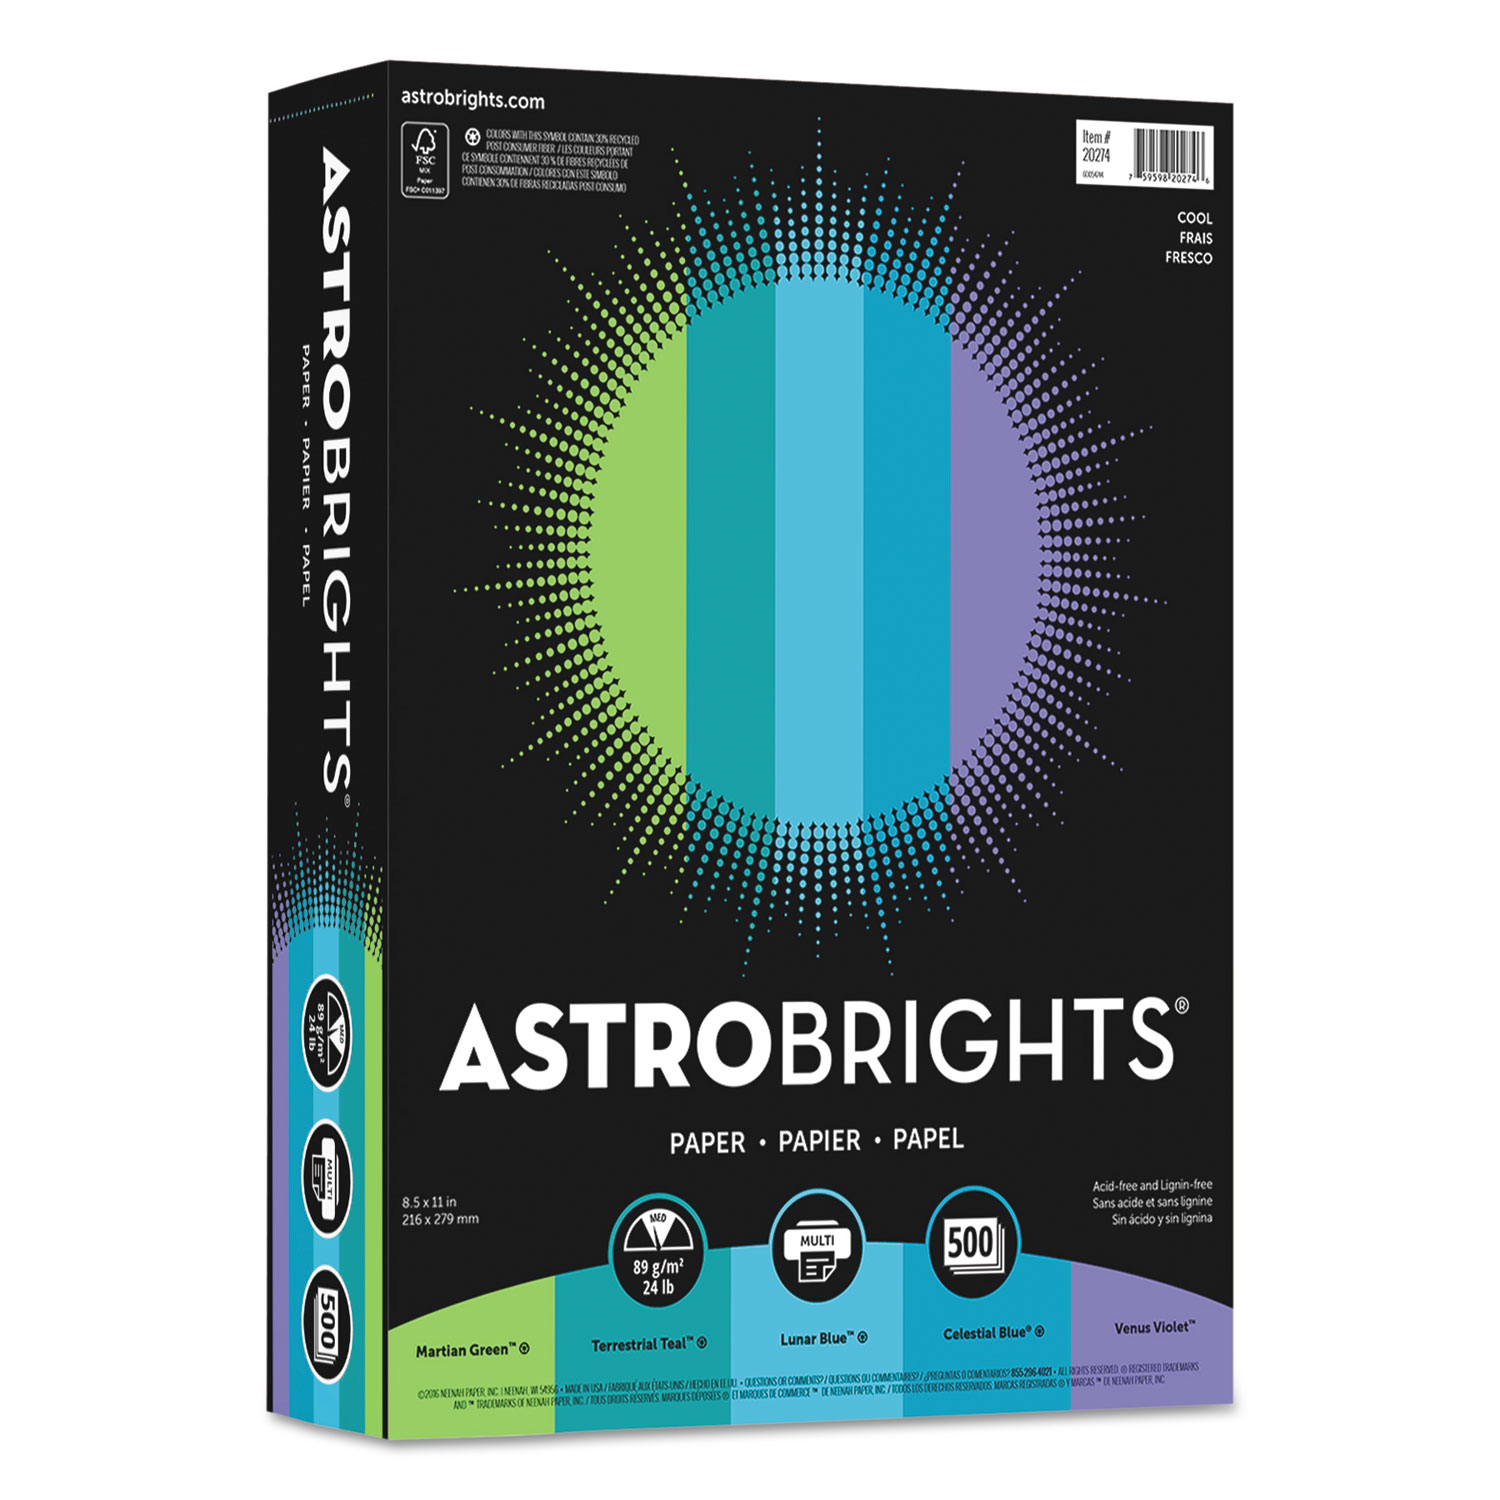  Astrobrights 20274 Color Paper - Cool Assortment, 24lb, 8.5 x 11, Assorted Cool Colors, 500/Ream (WAU20274) 